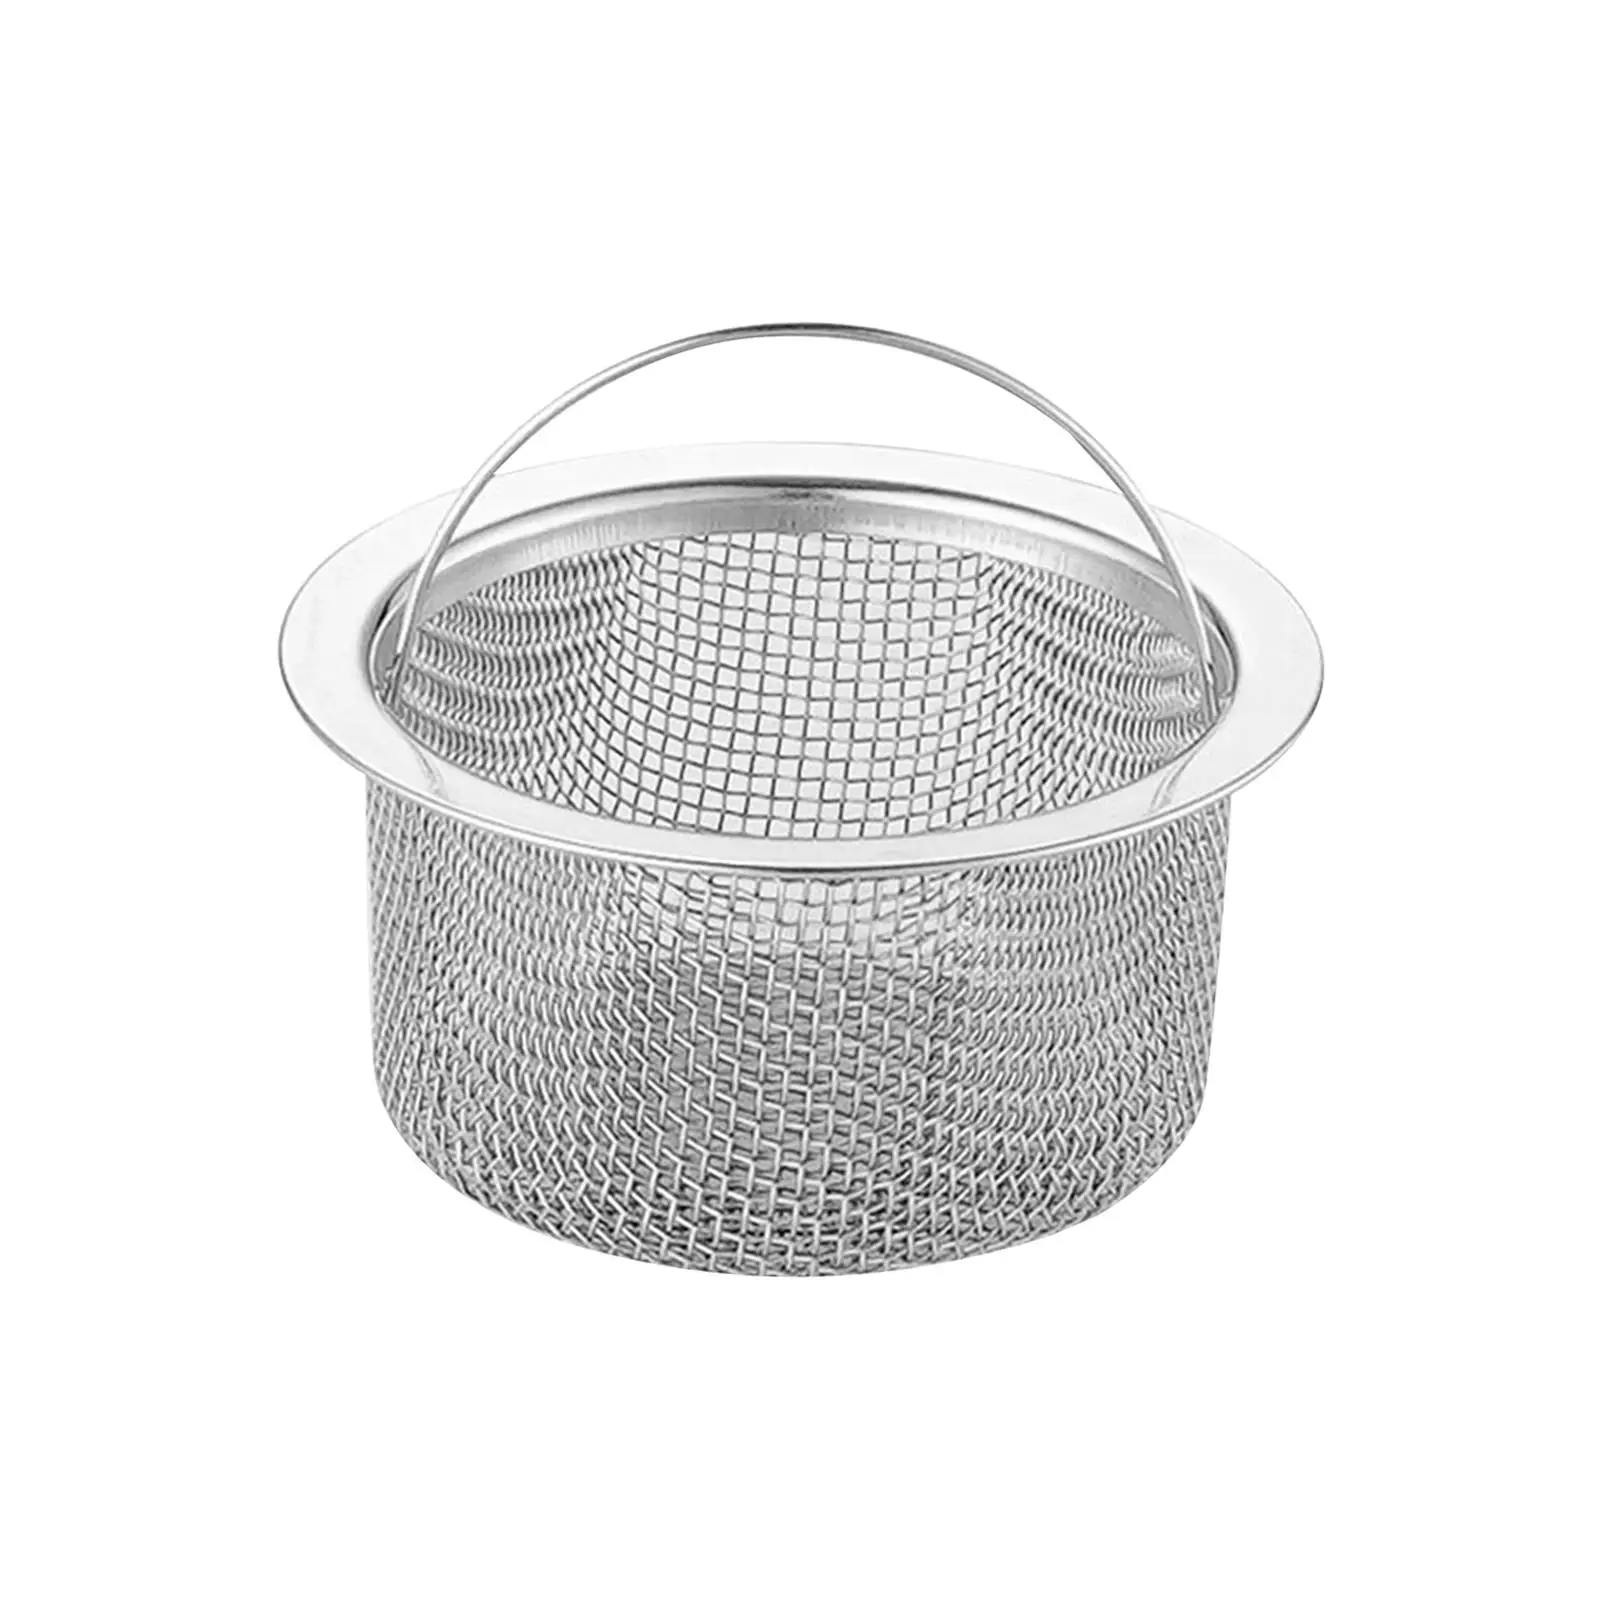 Stainless Steel Sink Strainer Basket Basin Drain Filter Shower Drain Hole Filter with Handle for Restaurant Bathroom Sink